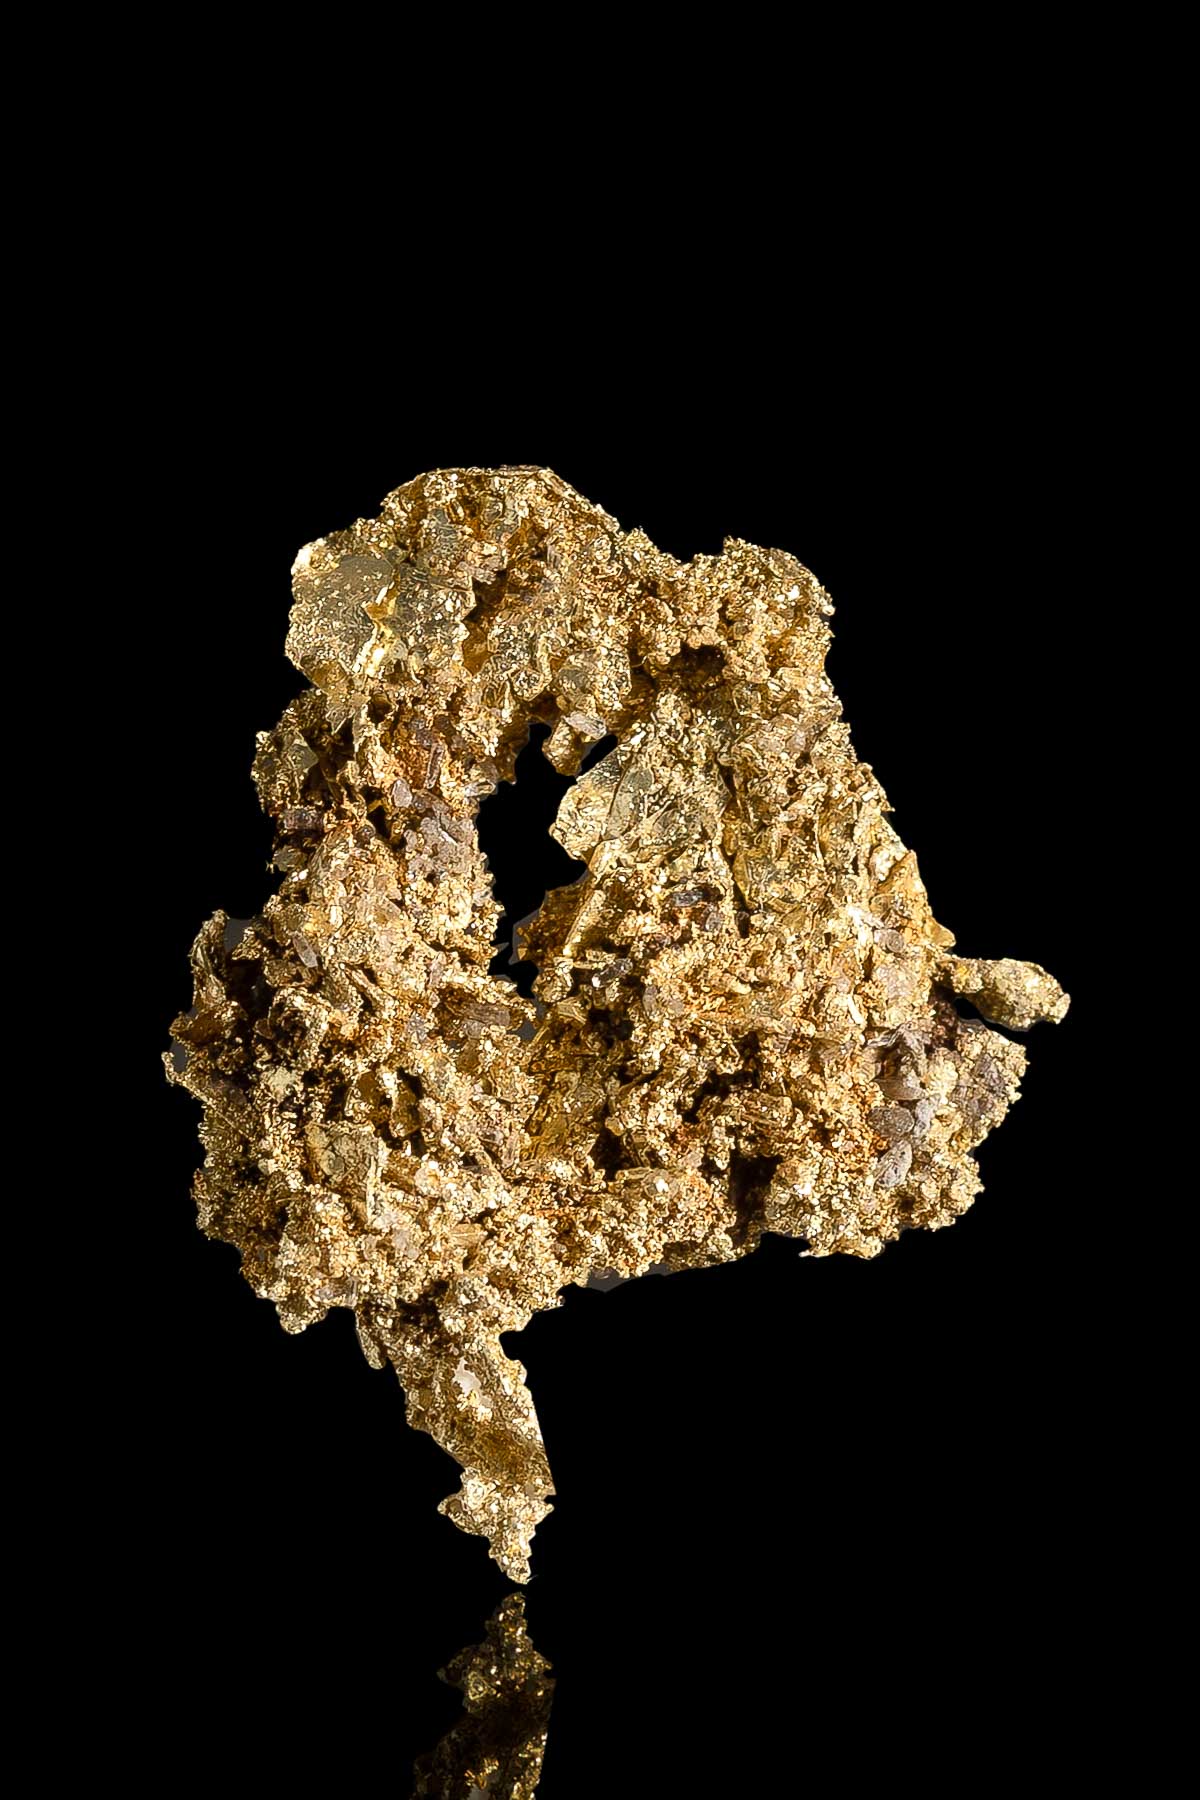 Beautiful Olinghouse Mine Gold Crystal Specimen - 2.68 grams